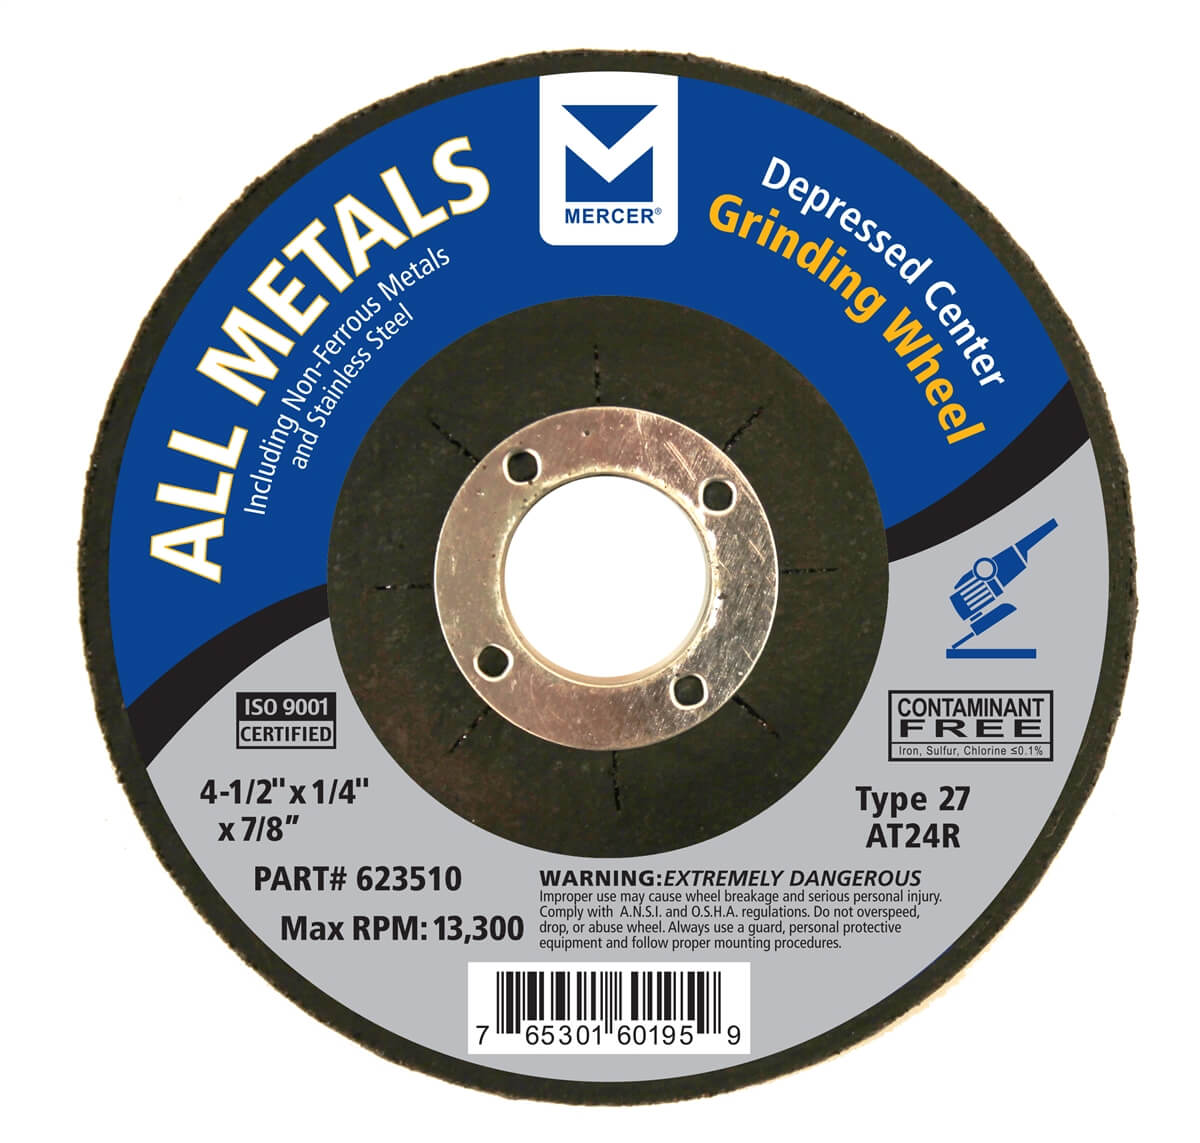 Type 27 Grinding Disc, 4-1/2" x 1/4" x 7/8"